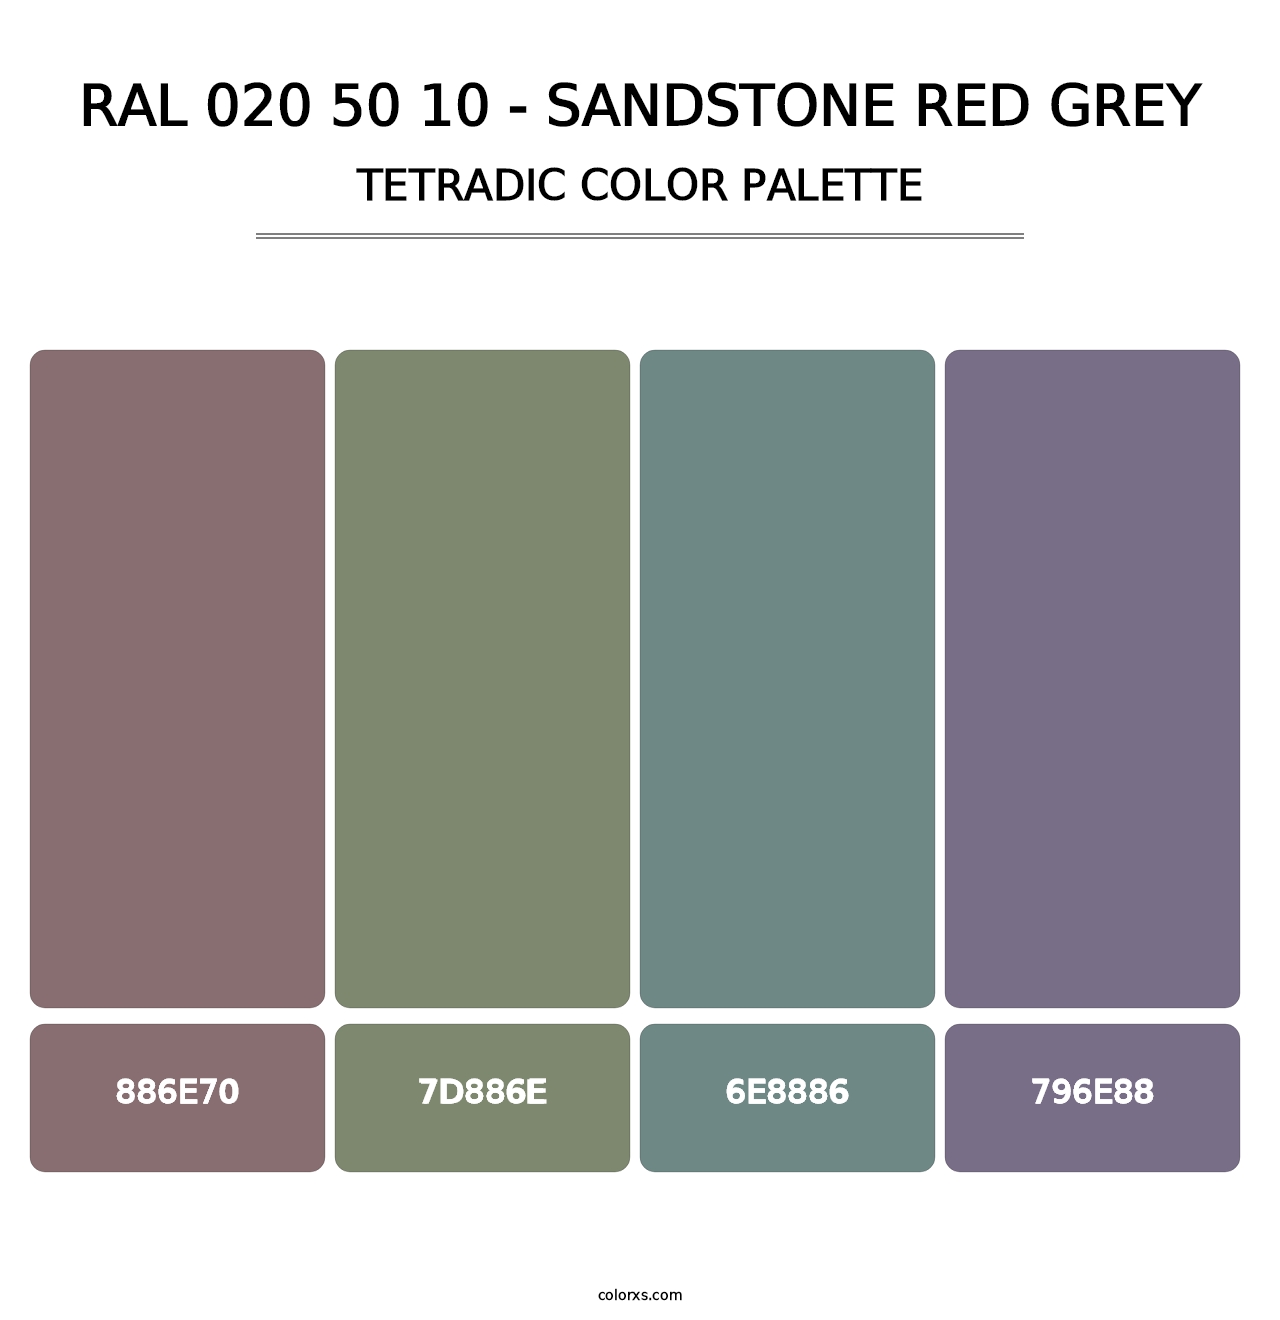 RAL 020 50 10 - Sandstone Red Grey - Tetradic Color Palette